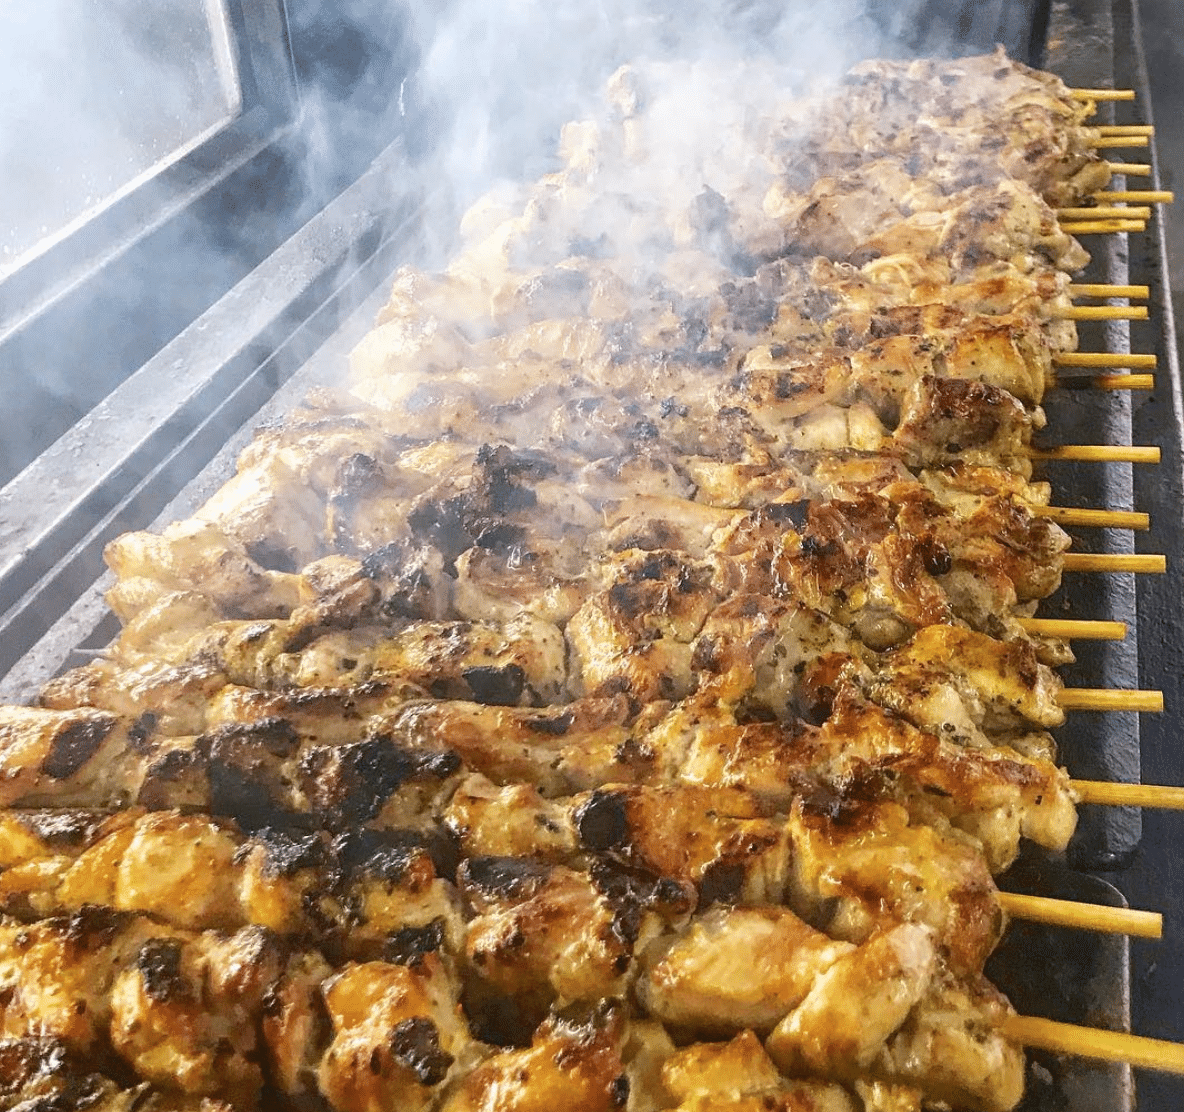 Greek Food Truck Catering